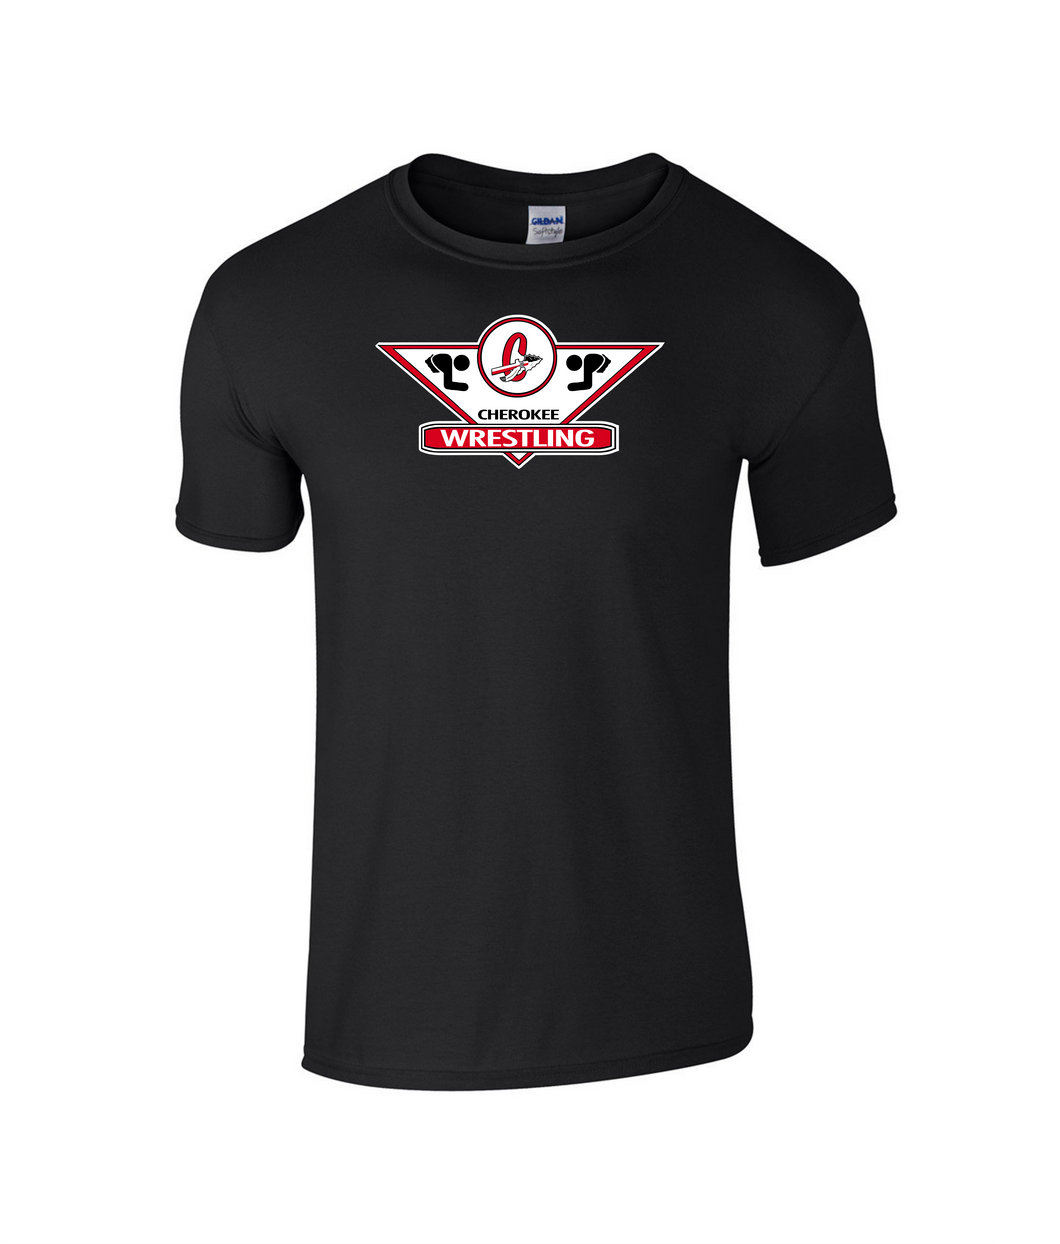 CHS-WRES-521-1 - Gildan Adult Softstyle Short Sleeve T-Shirt - Cherokee C Wrestling Logo